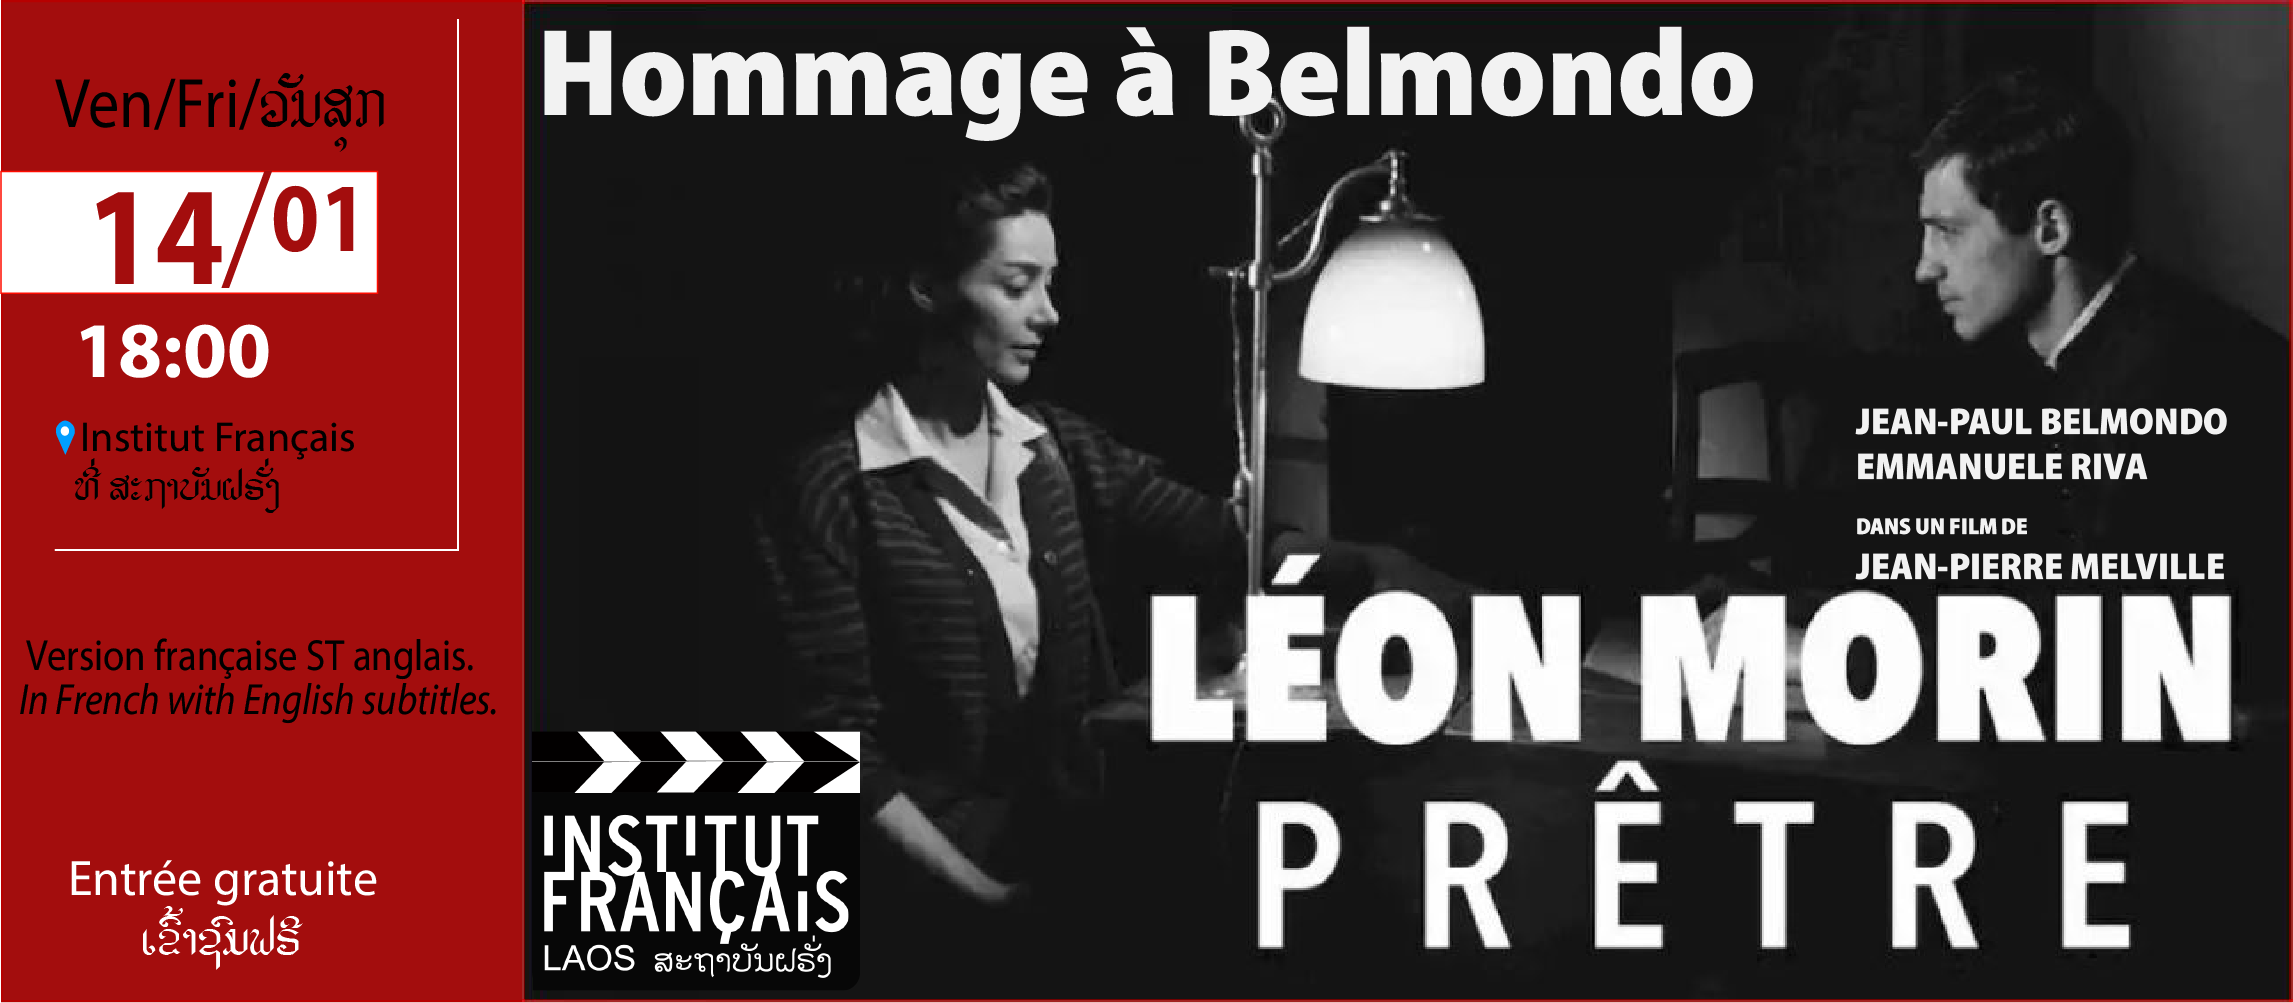 Film screening outdoors! HOMMAGE A BELMONDO “Léon Morin prêtre”